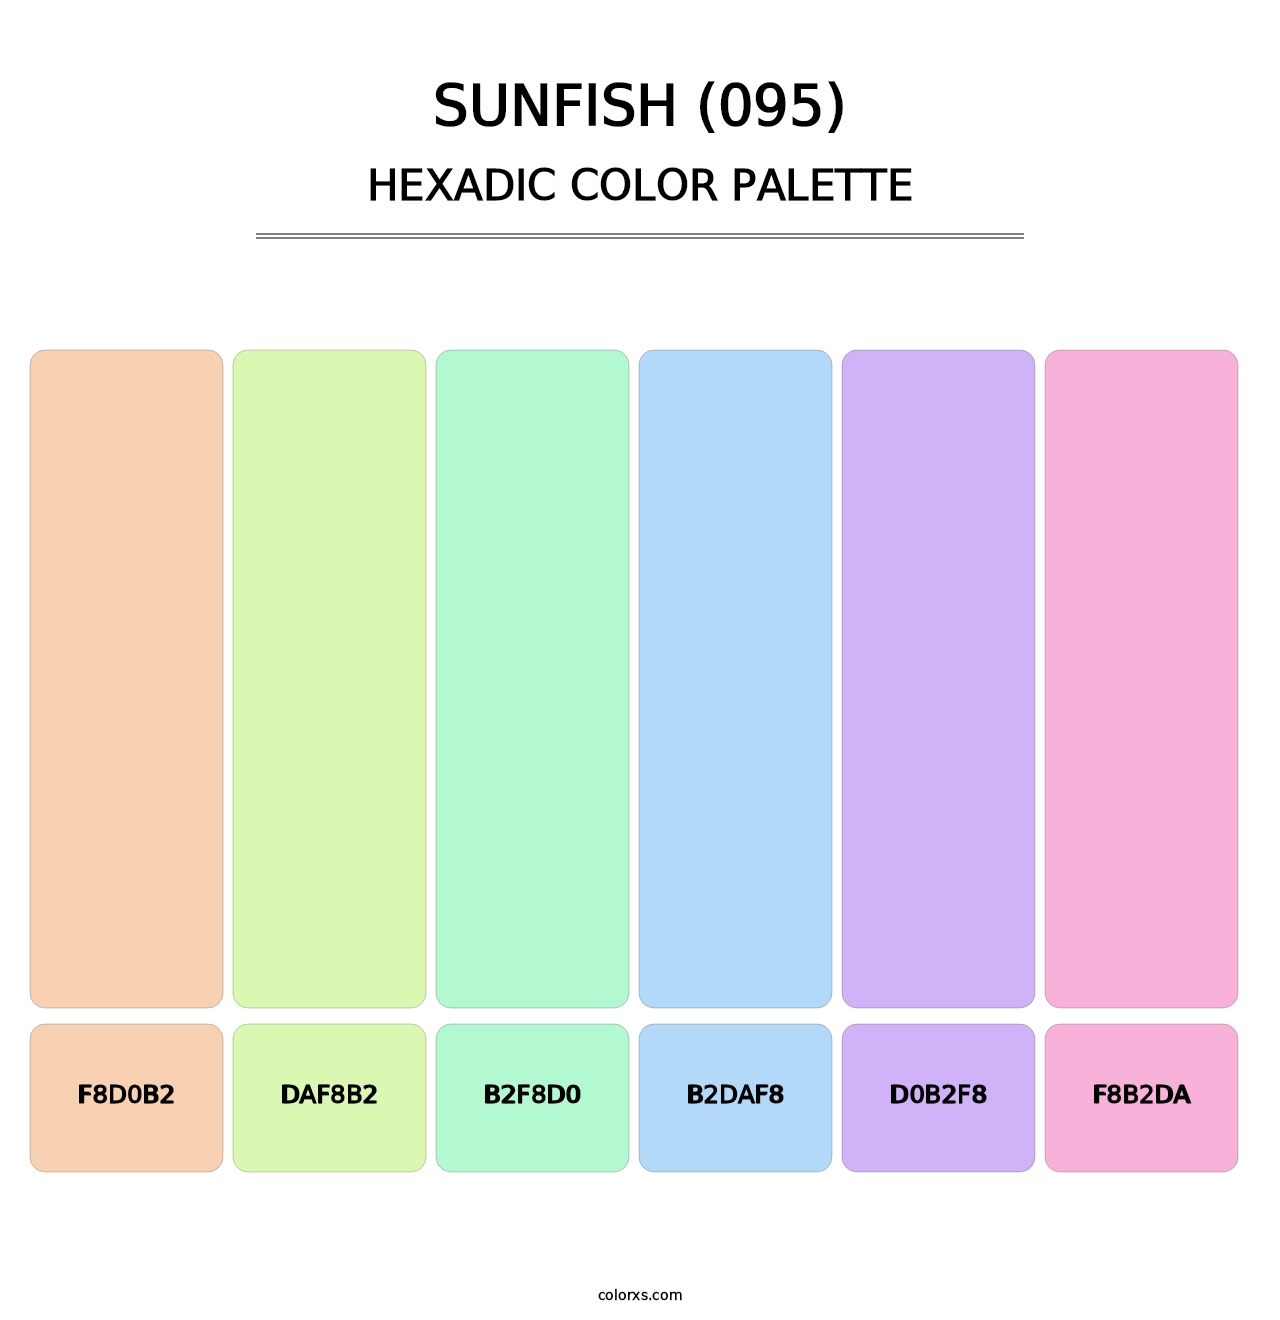 Sunfish (095) - Hexadic Color Palette